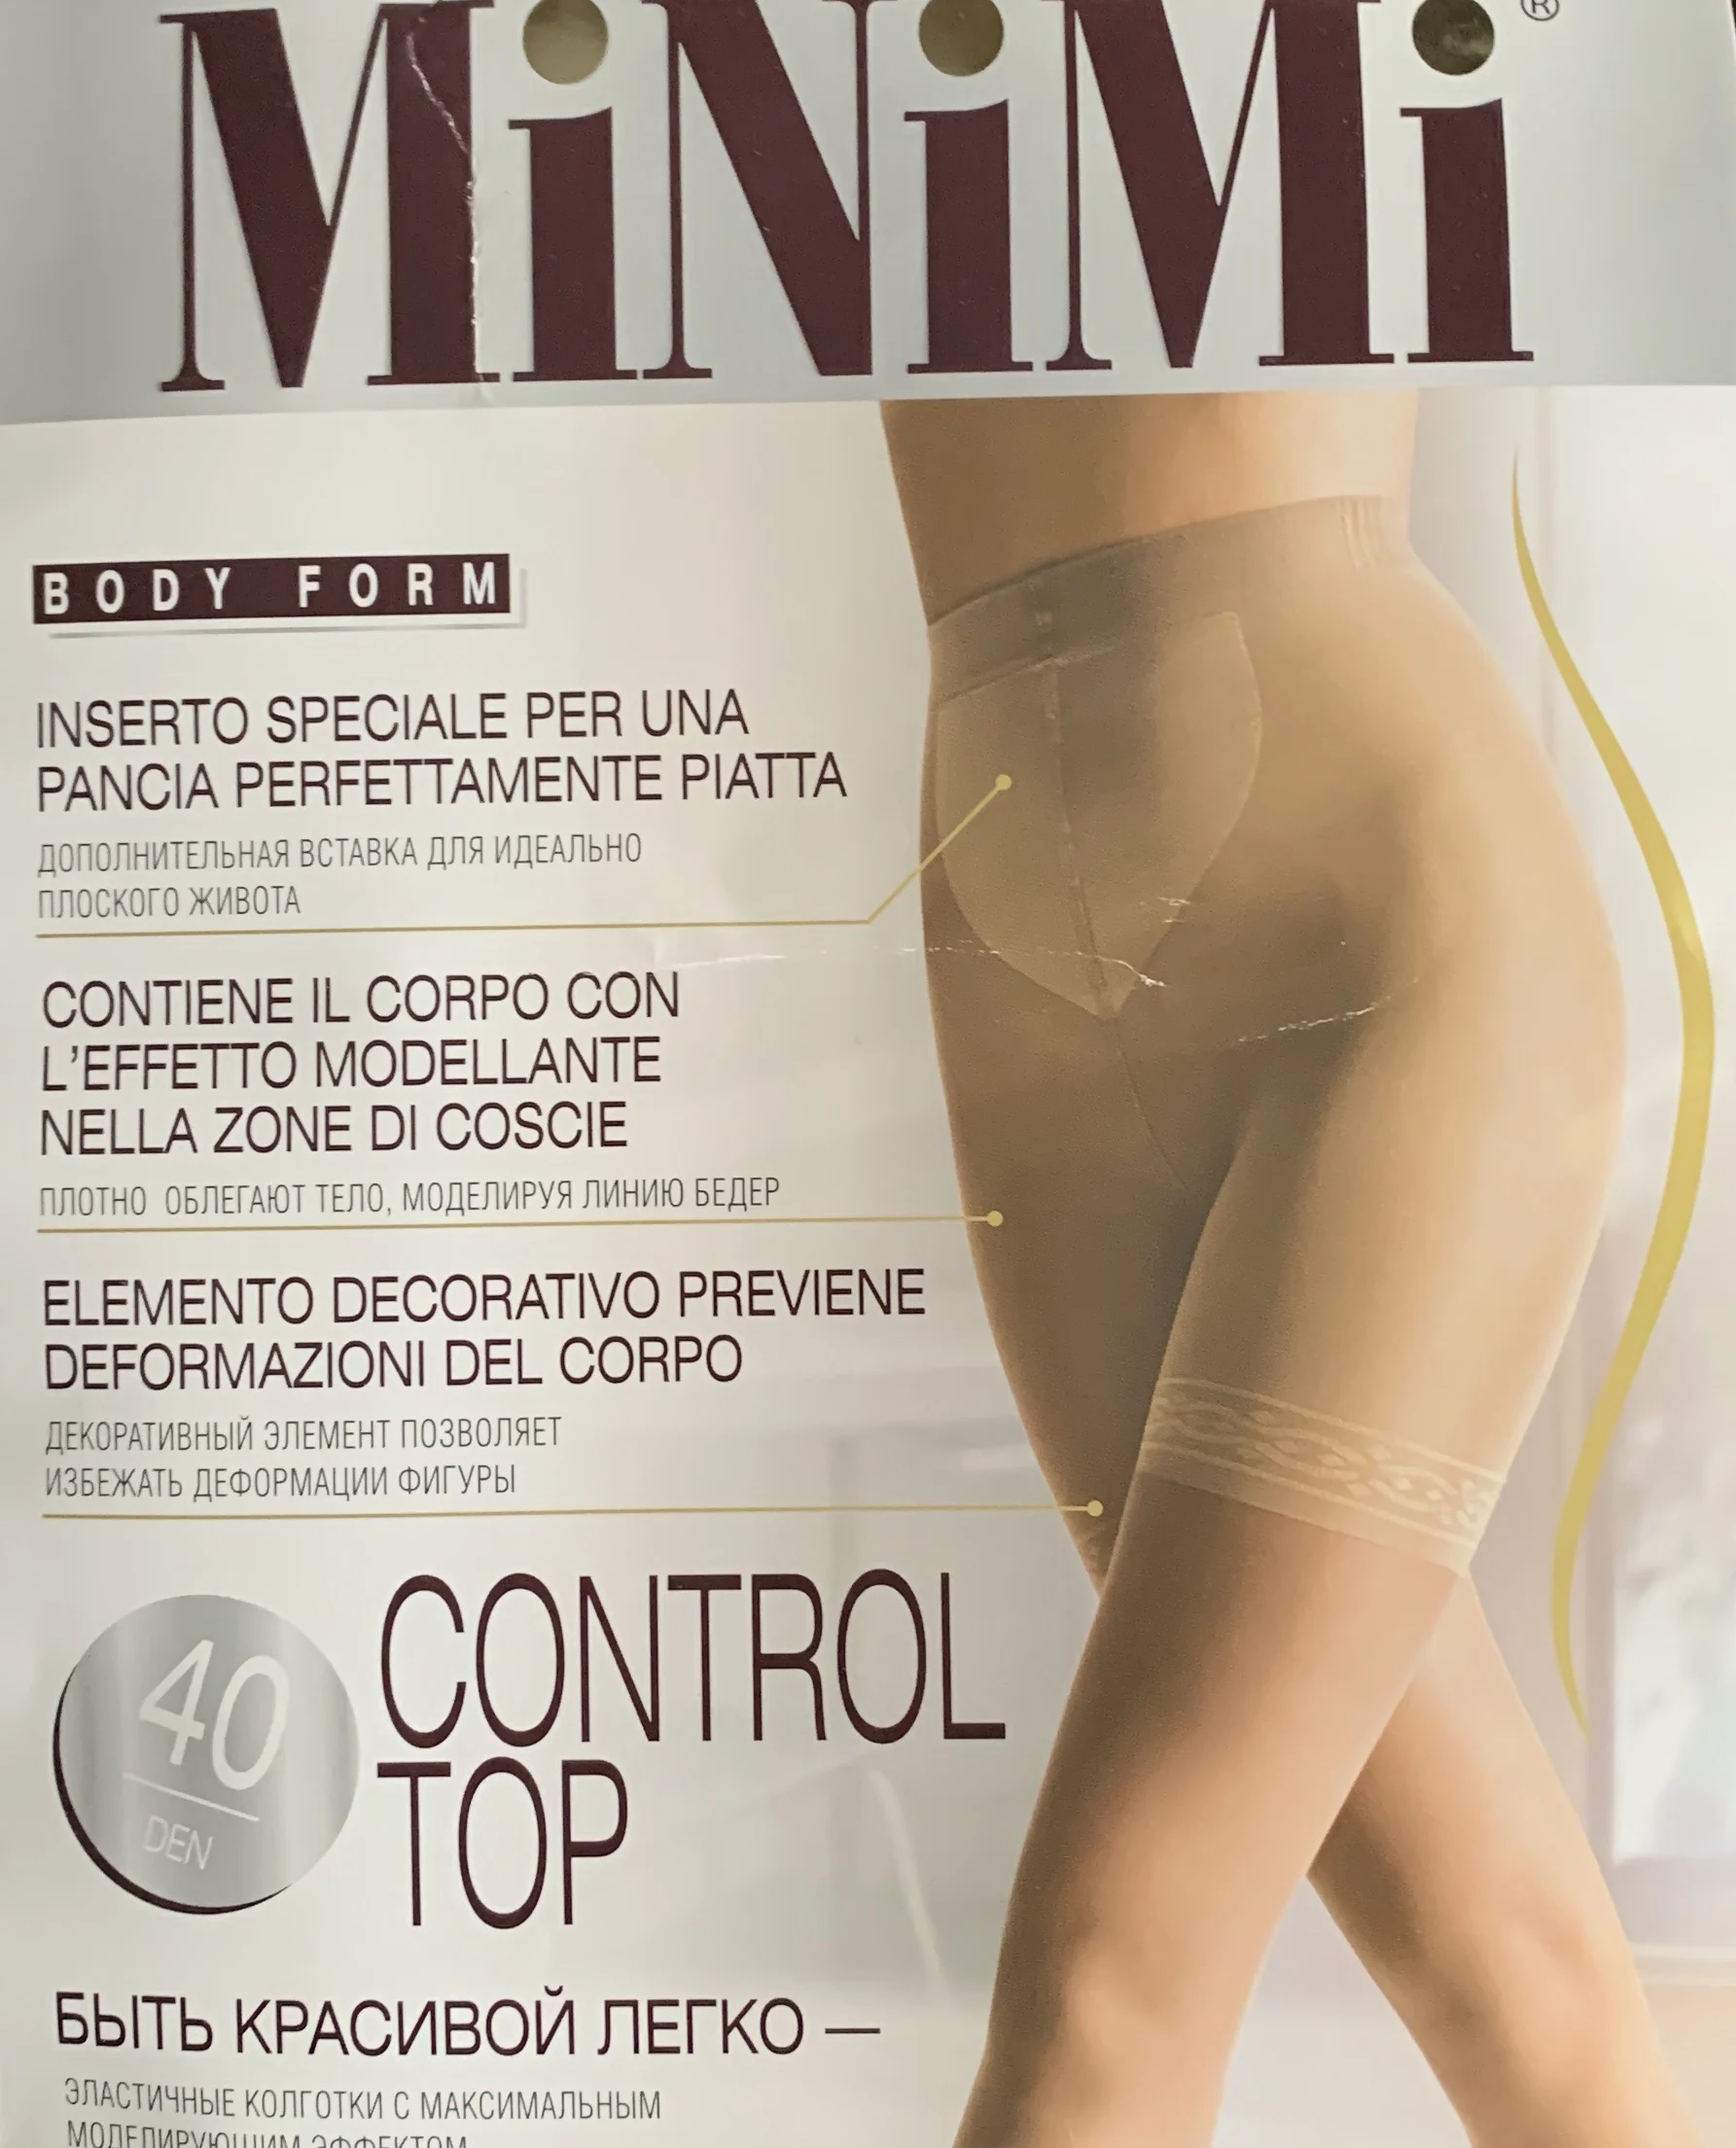 Колготки MINIMI BODY FORM, модель CONTROL TOP 40 DEN | AliExpress